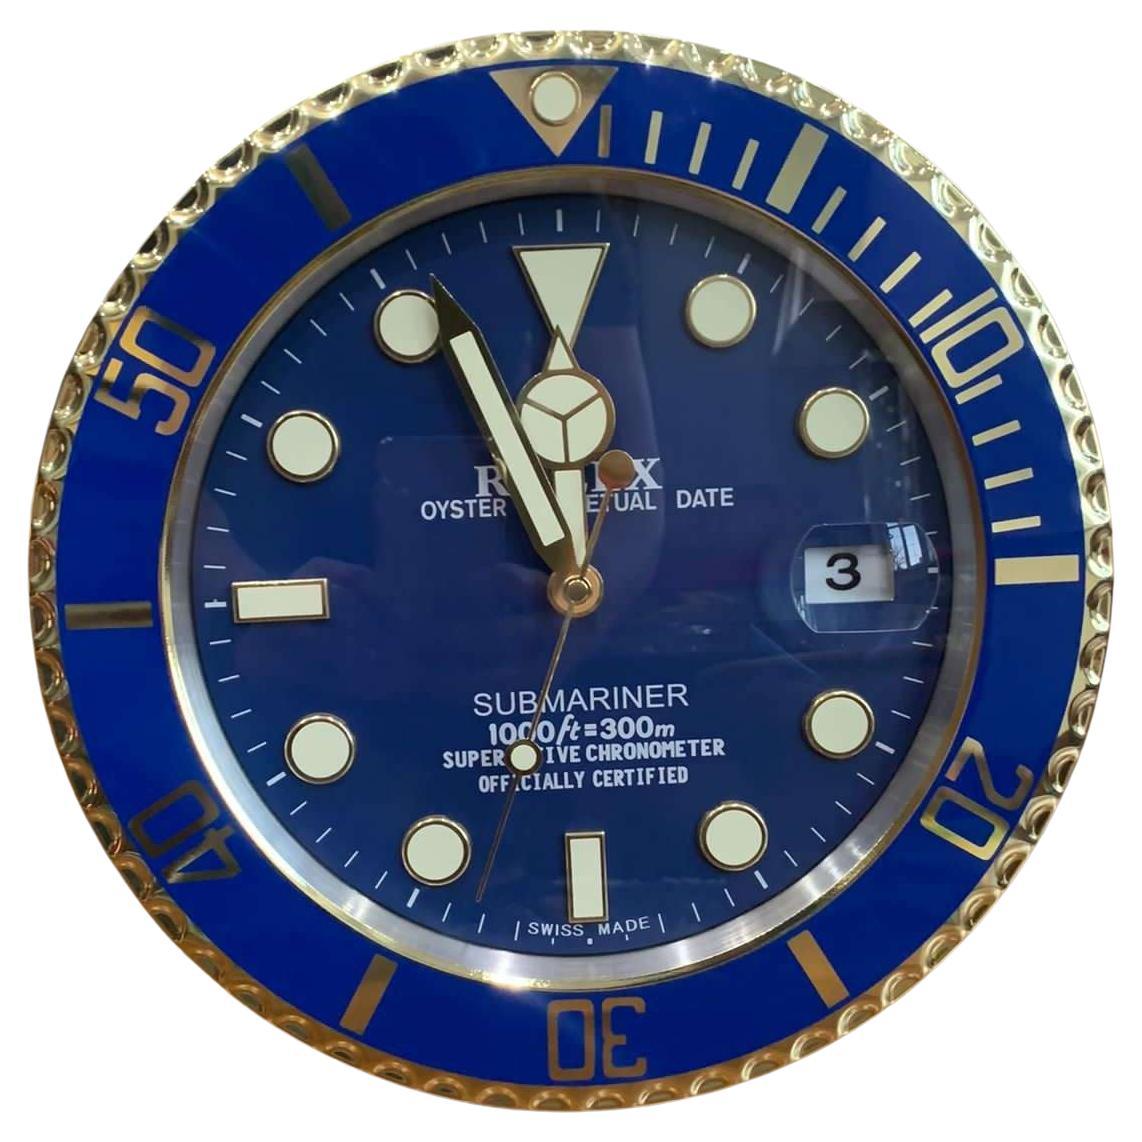 Horloge murale ROLEX Oyster Perpetual Submariner bleu et or officiellement certifiée 